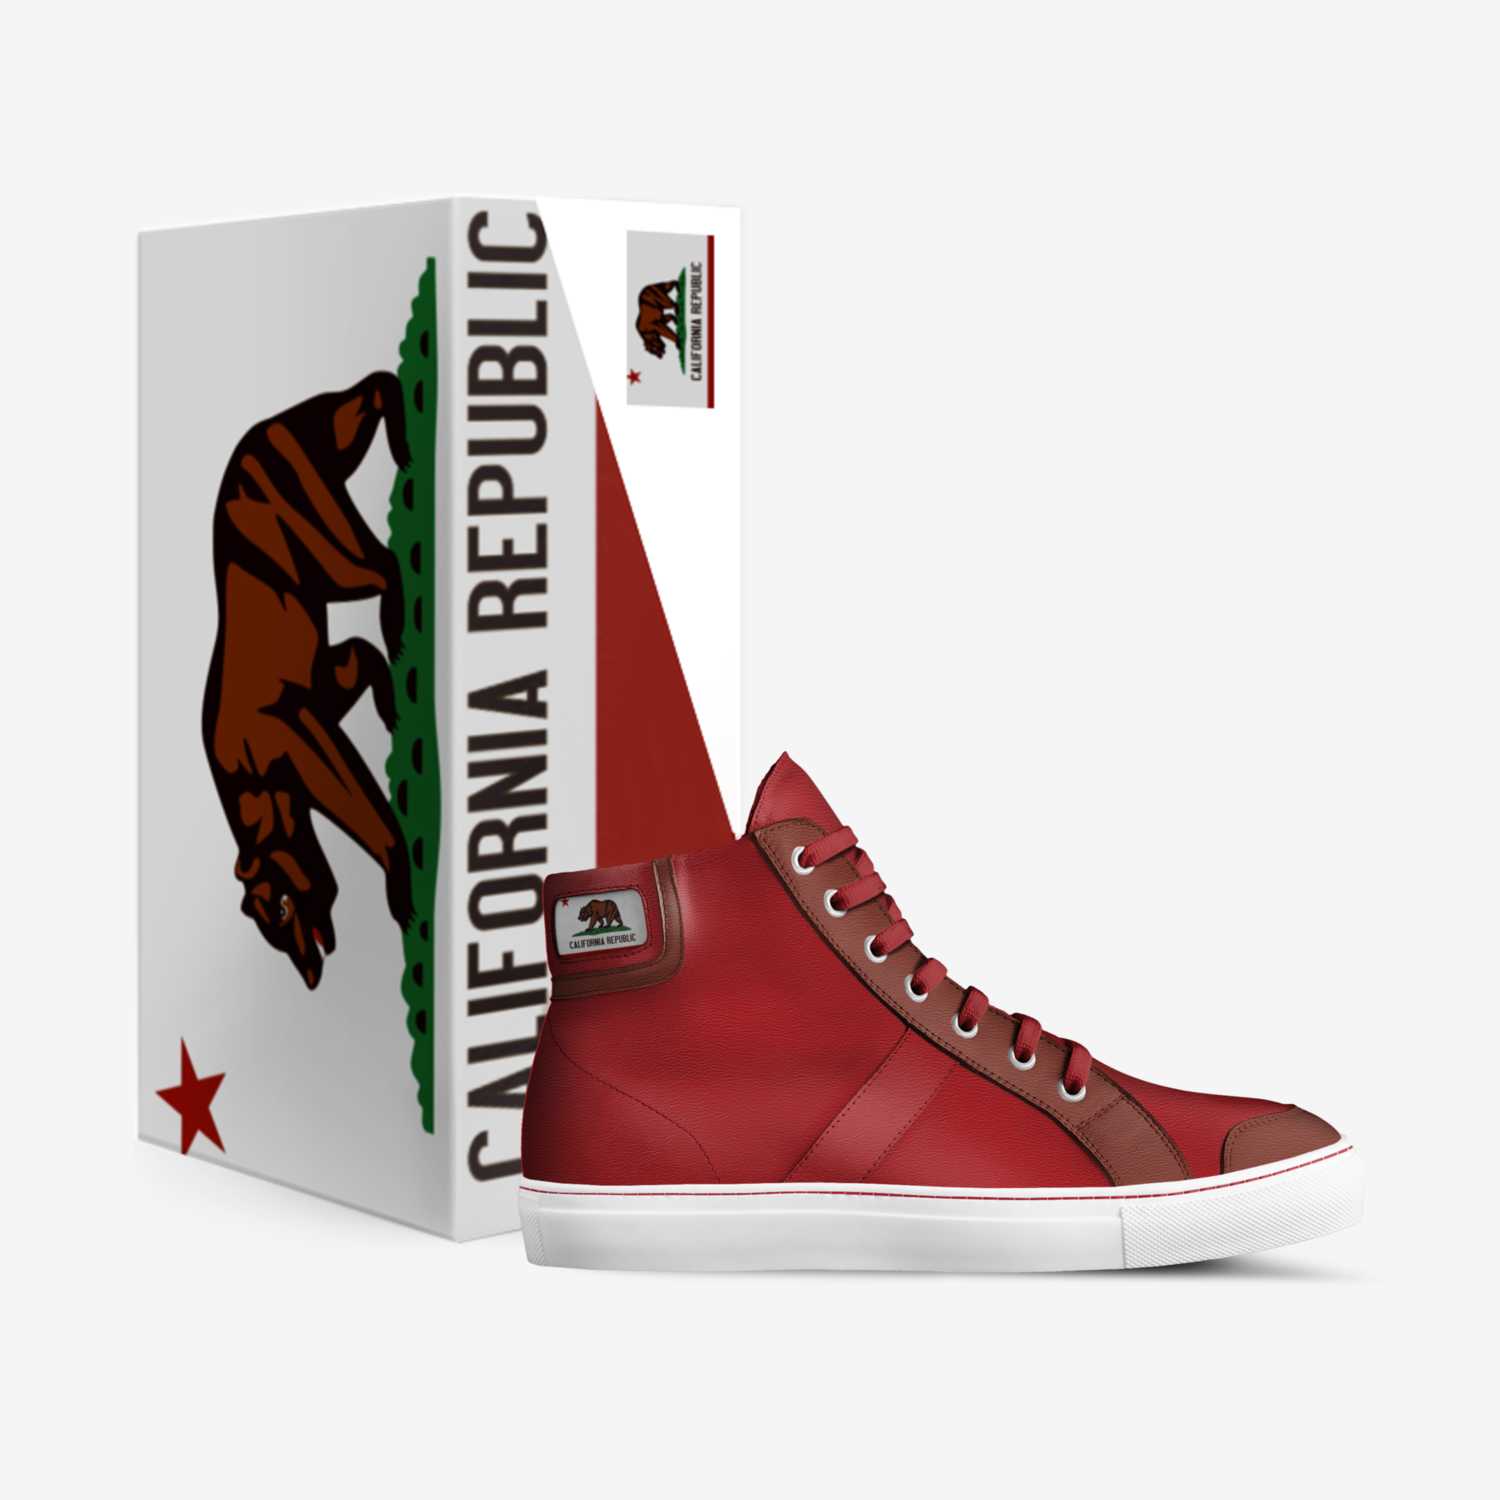 'CALIFORNIA'  DCJ-CLUB custom made in Italy shoes by Tunisia Al-salahuddin | Box view